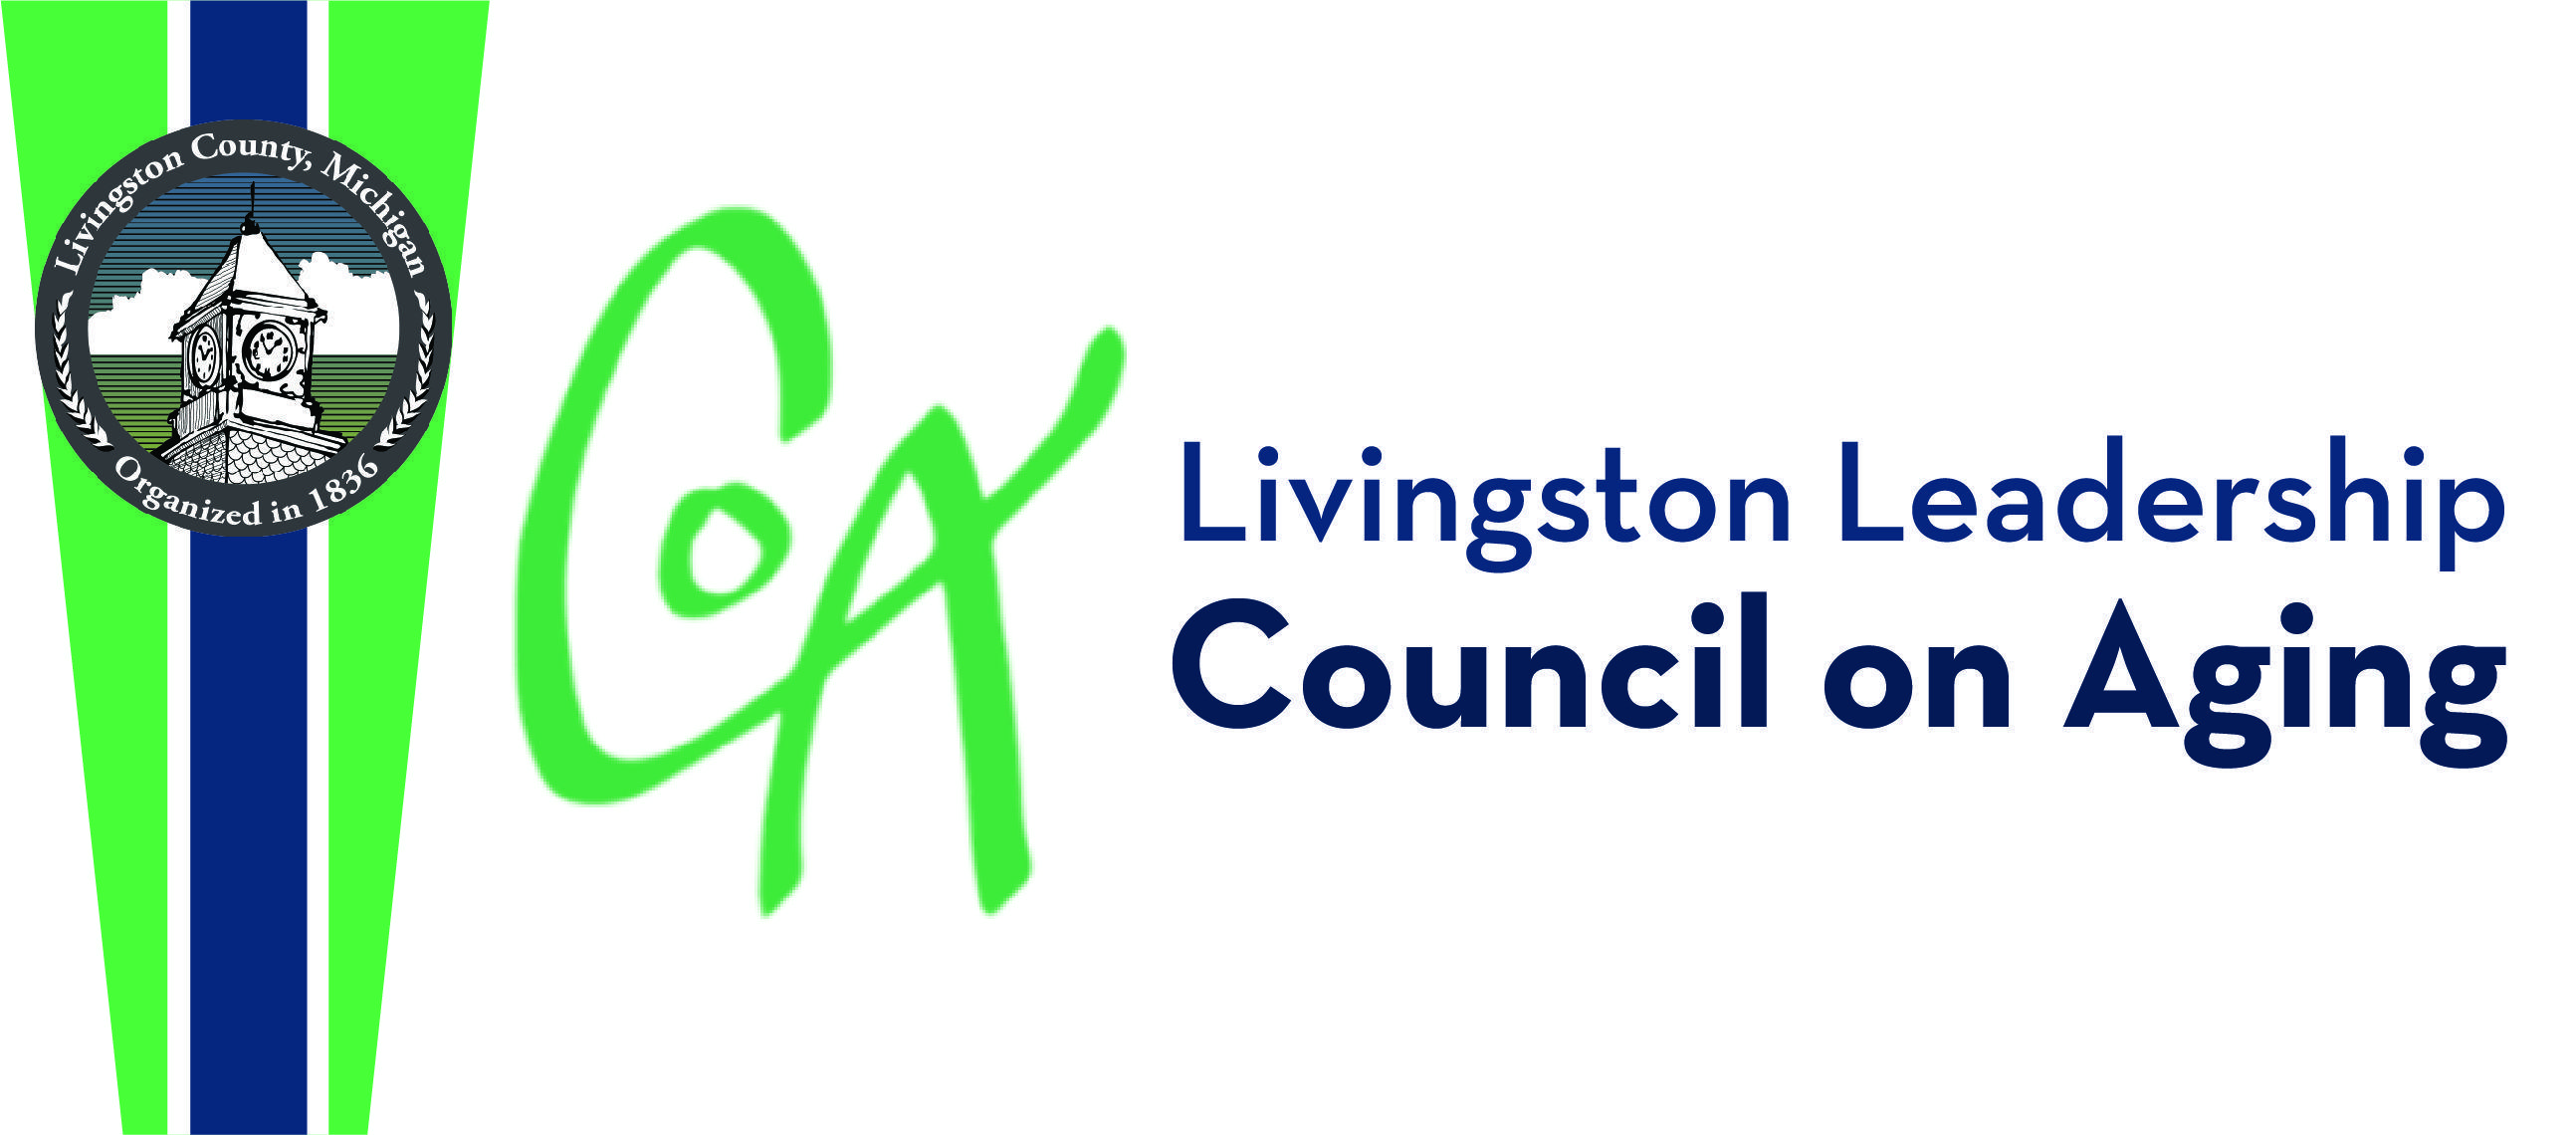 Livingston Logo - Allied Collaborative: Livingston Leadership Council on Aging. Human